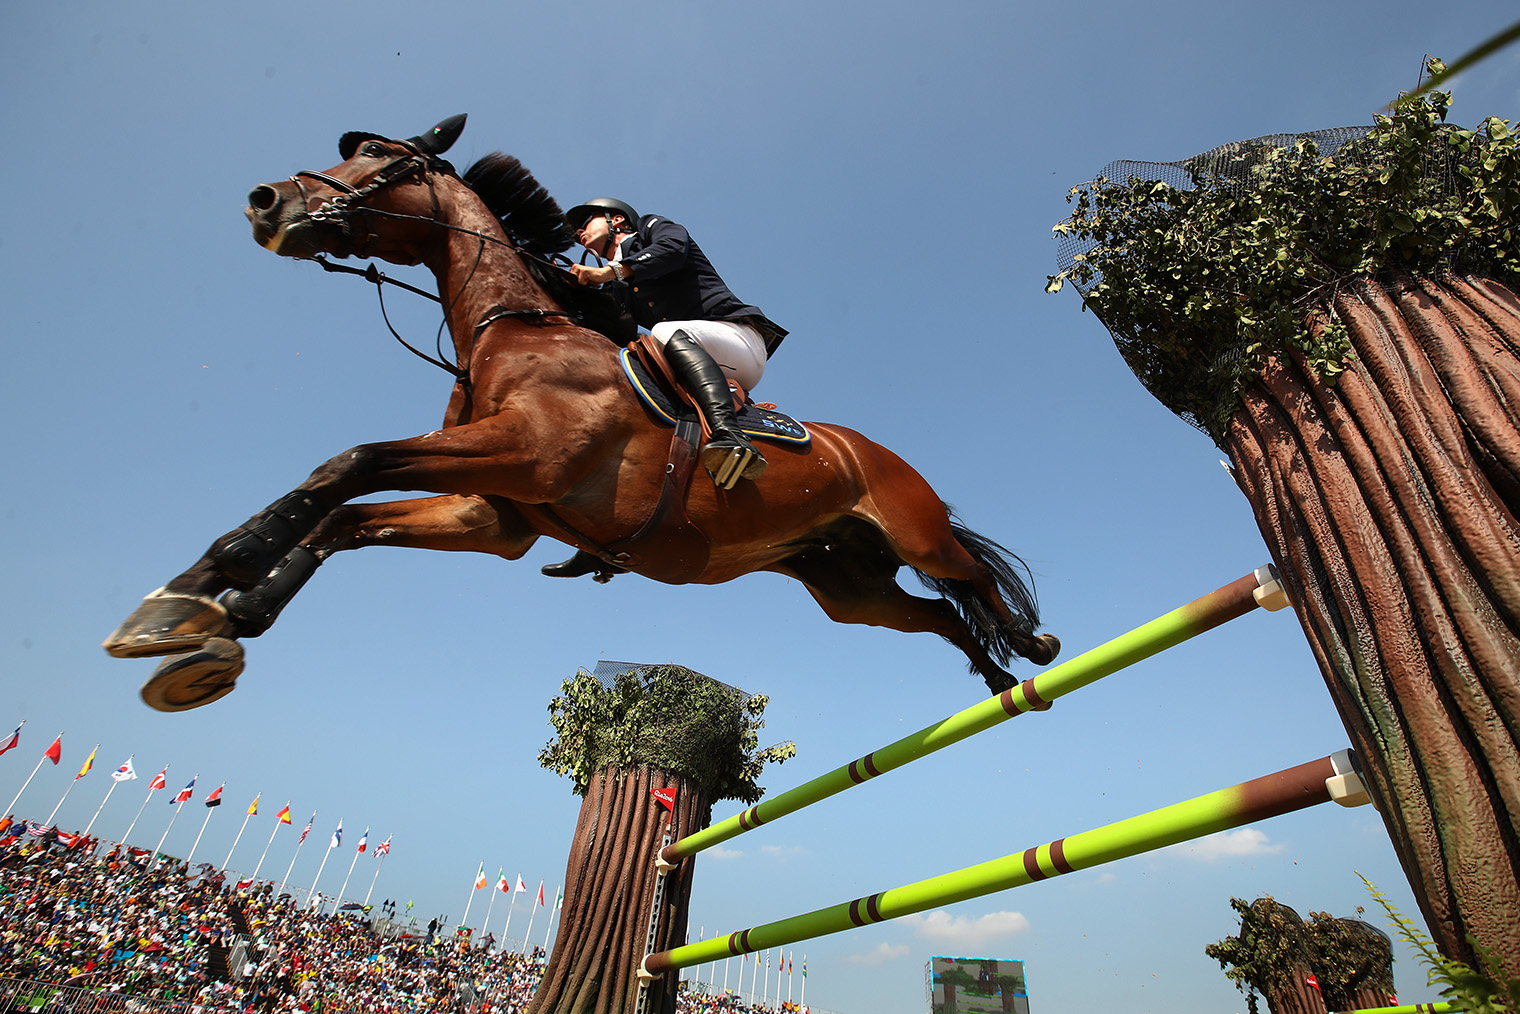 Конкур на Олимпиаде 2016 года в Рио-де-Жанейро. Фотография: Mark Kolbe / Getty Images